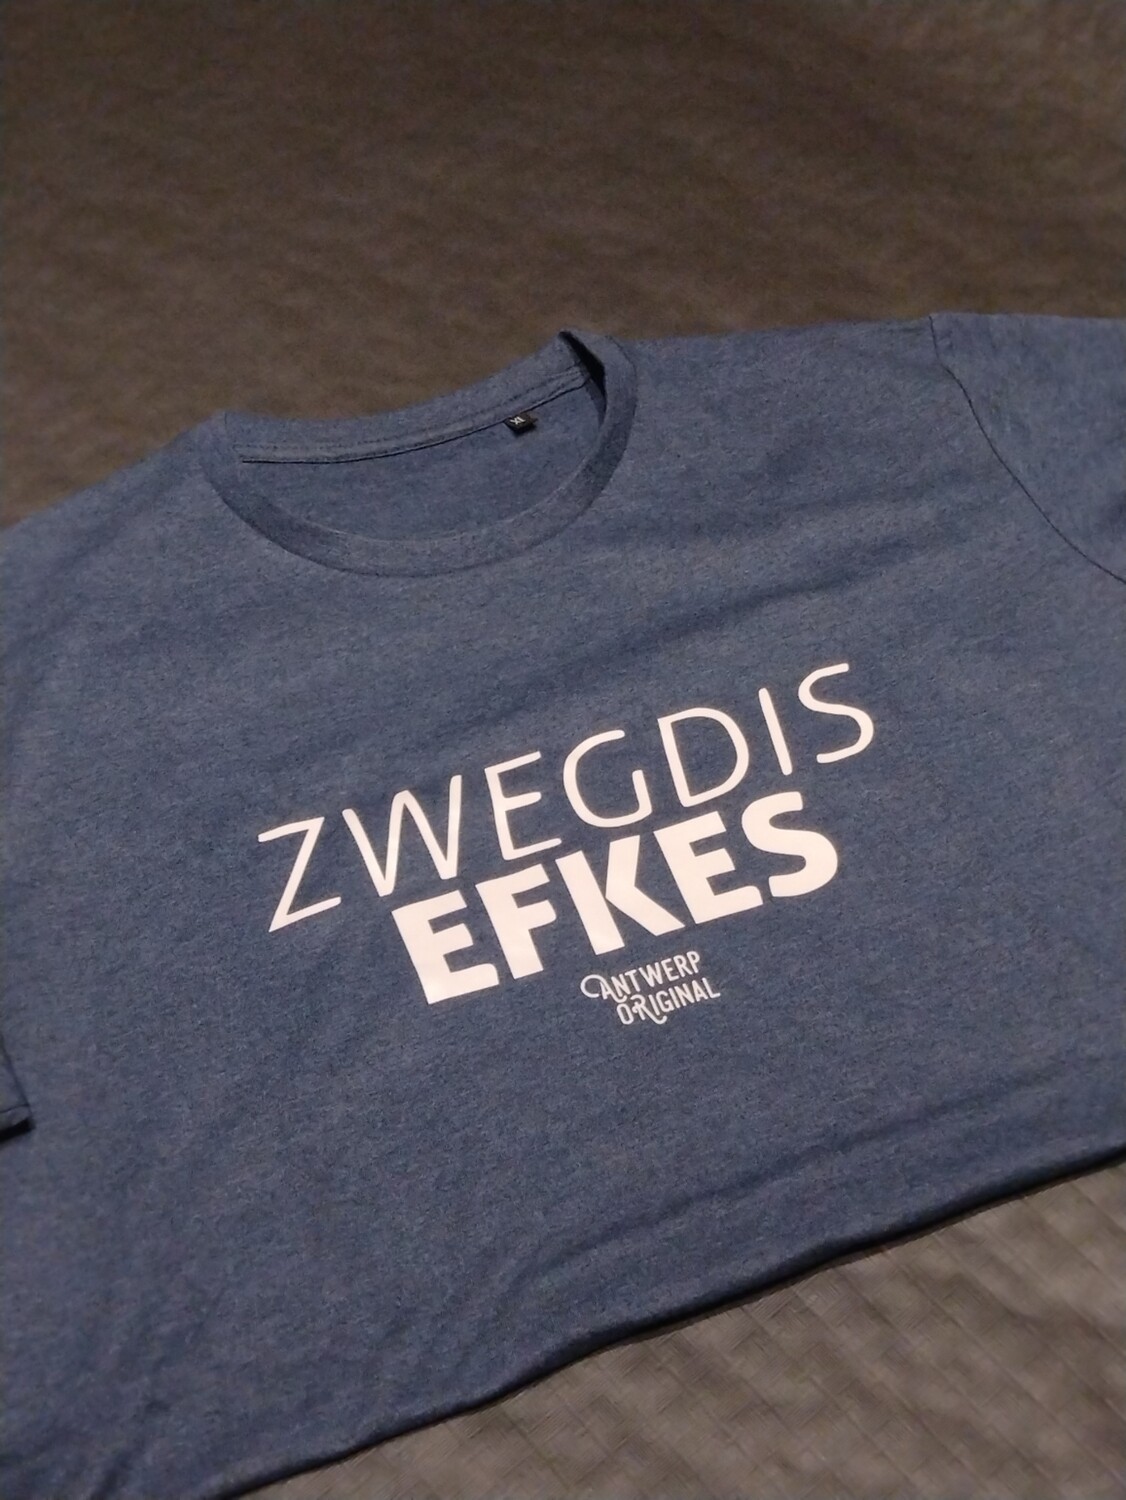 Tshirt - Zwegdis Efkes - Xtra Large 